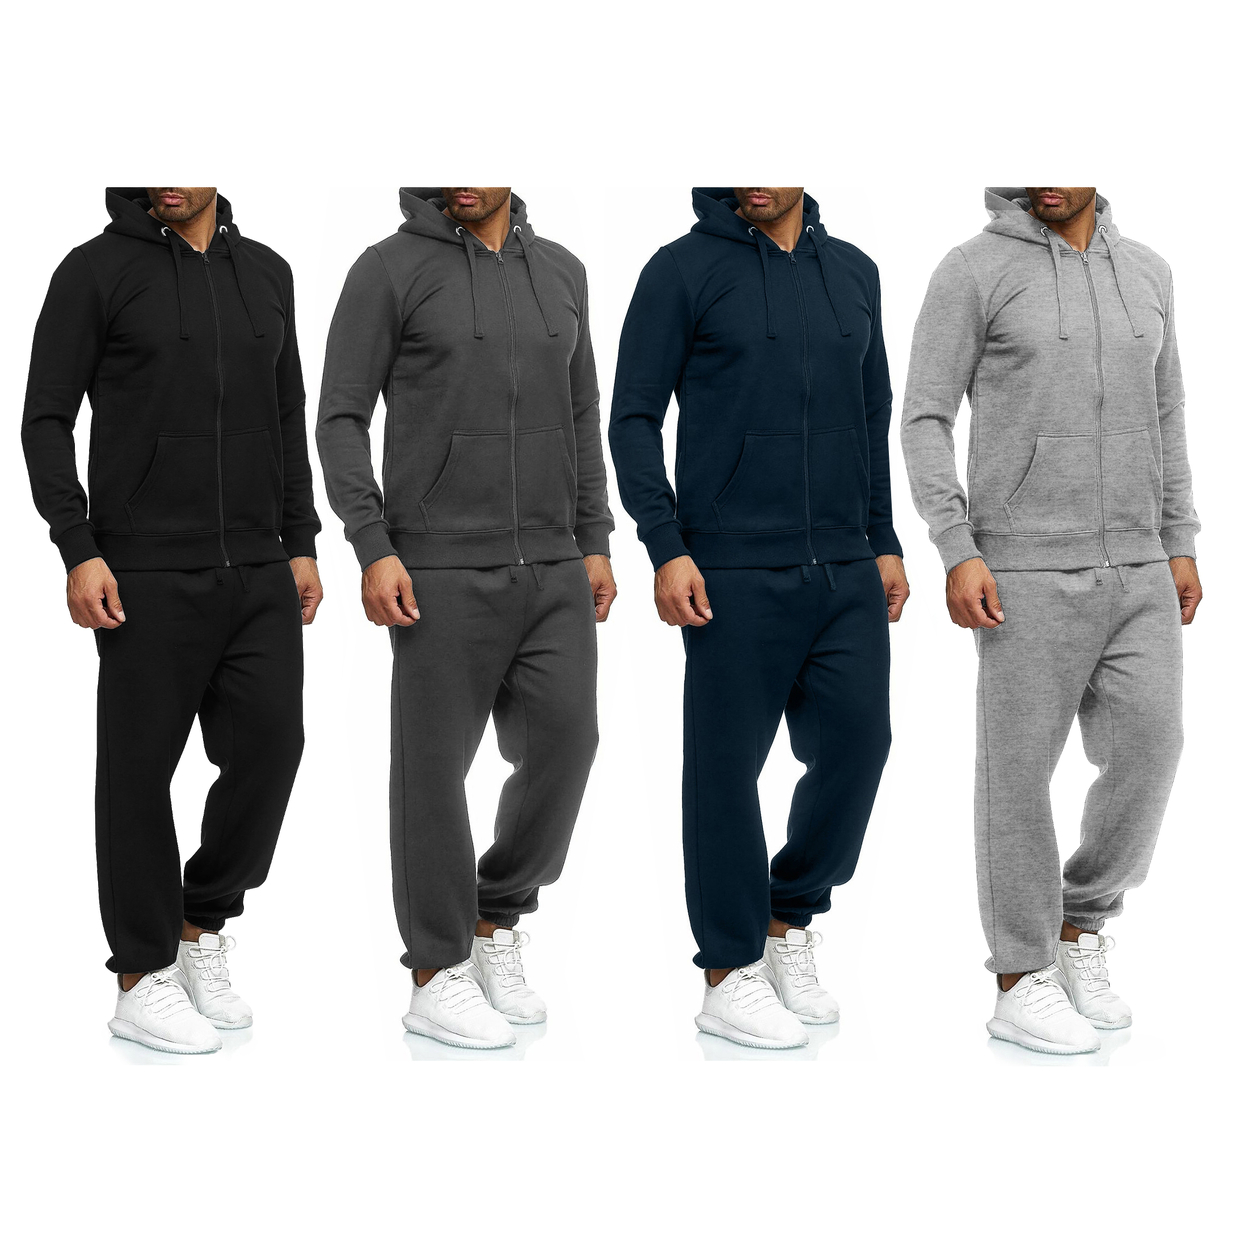 2/4-Piece: Men's Winter Warm Cozy Athletic Multi-Pockets BIG & TALL Sweatsuit Set - Navy, 2, Large